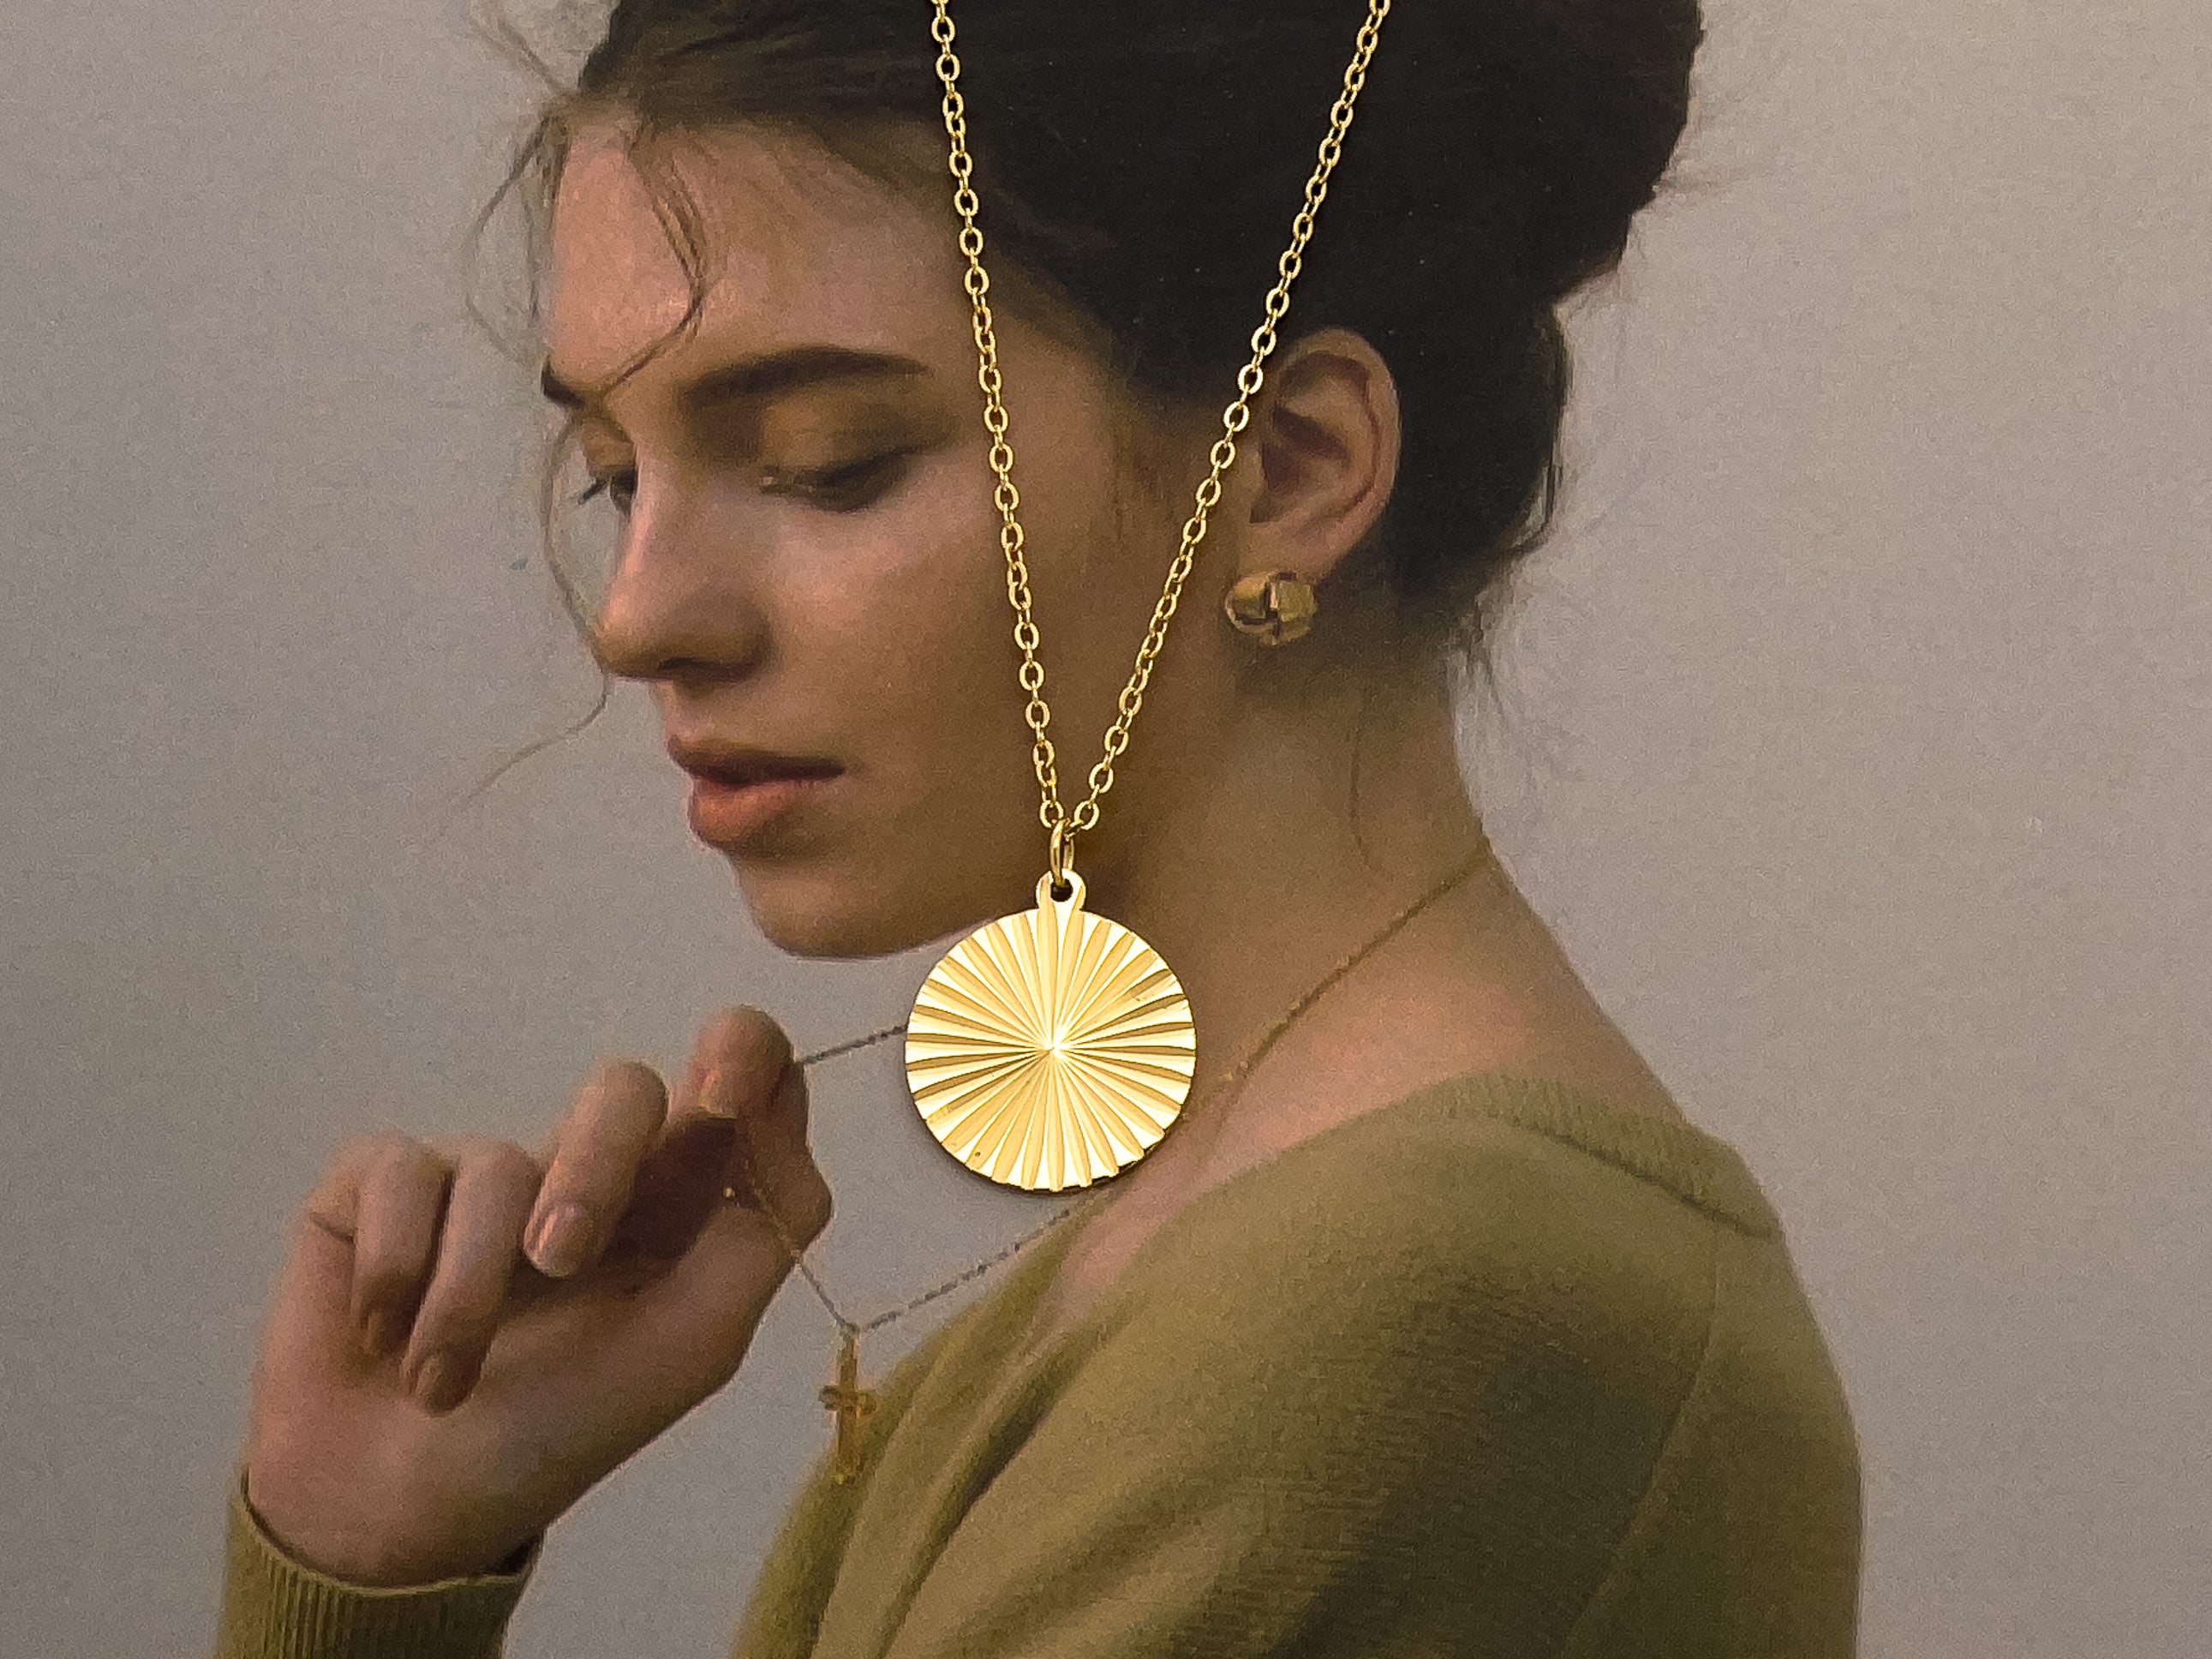 The Bright Sun Gold Necklace - Jewelry Store | Chic Chic Bon